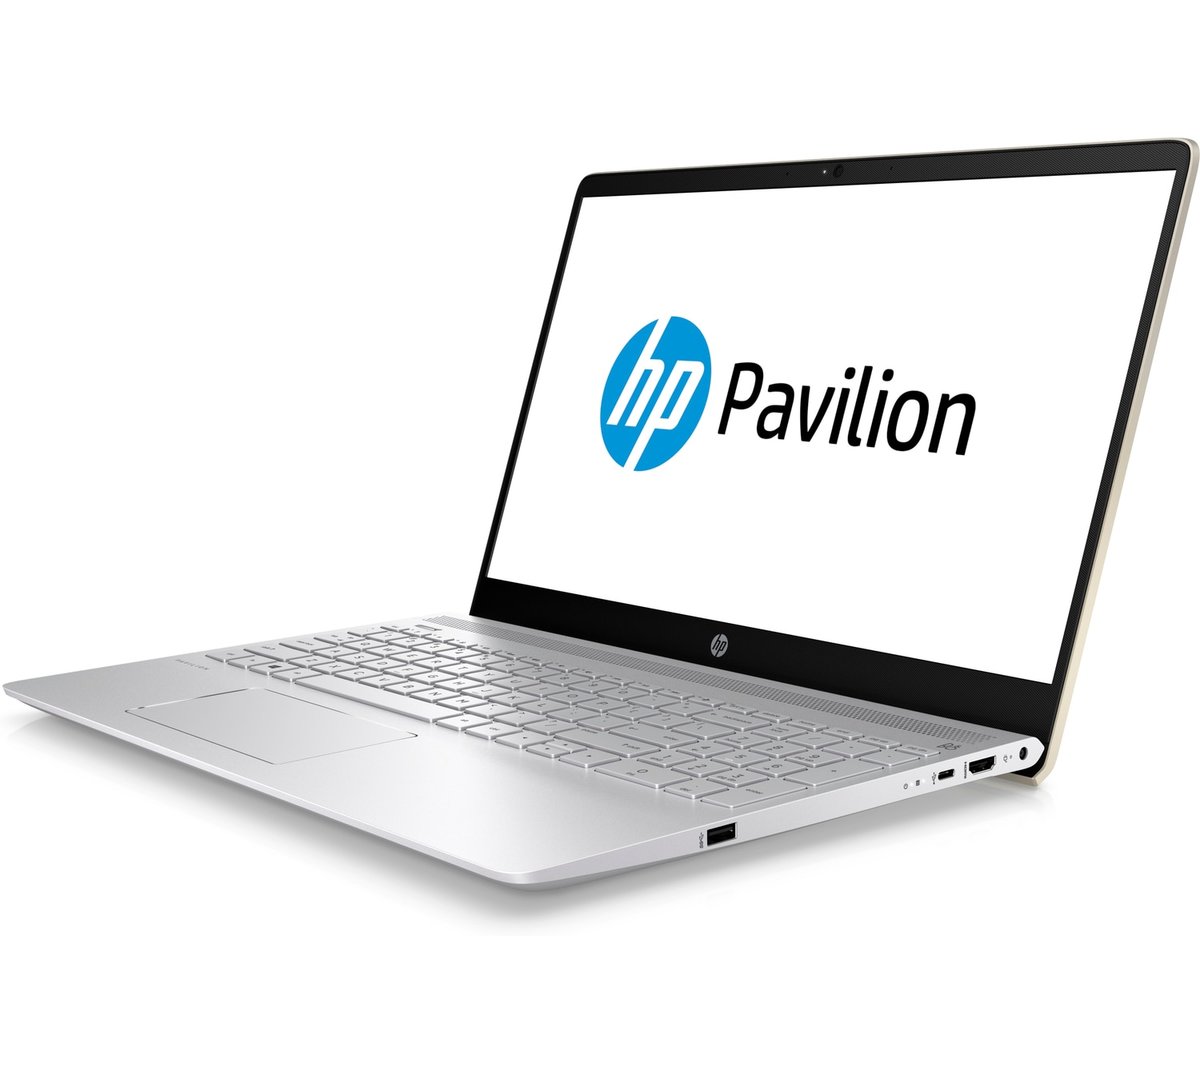 HP Pavilion 15-ck004ur